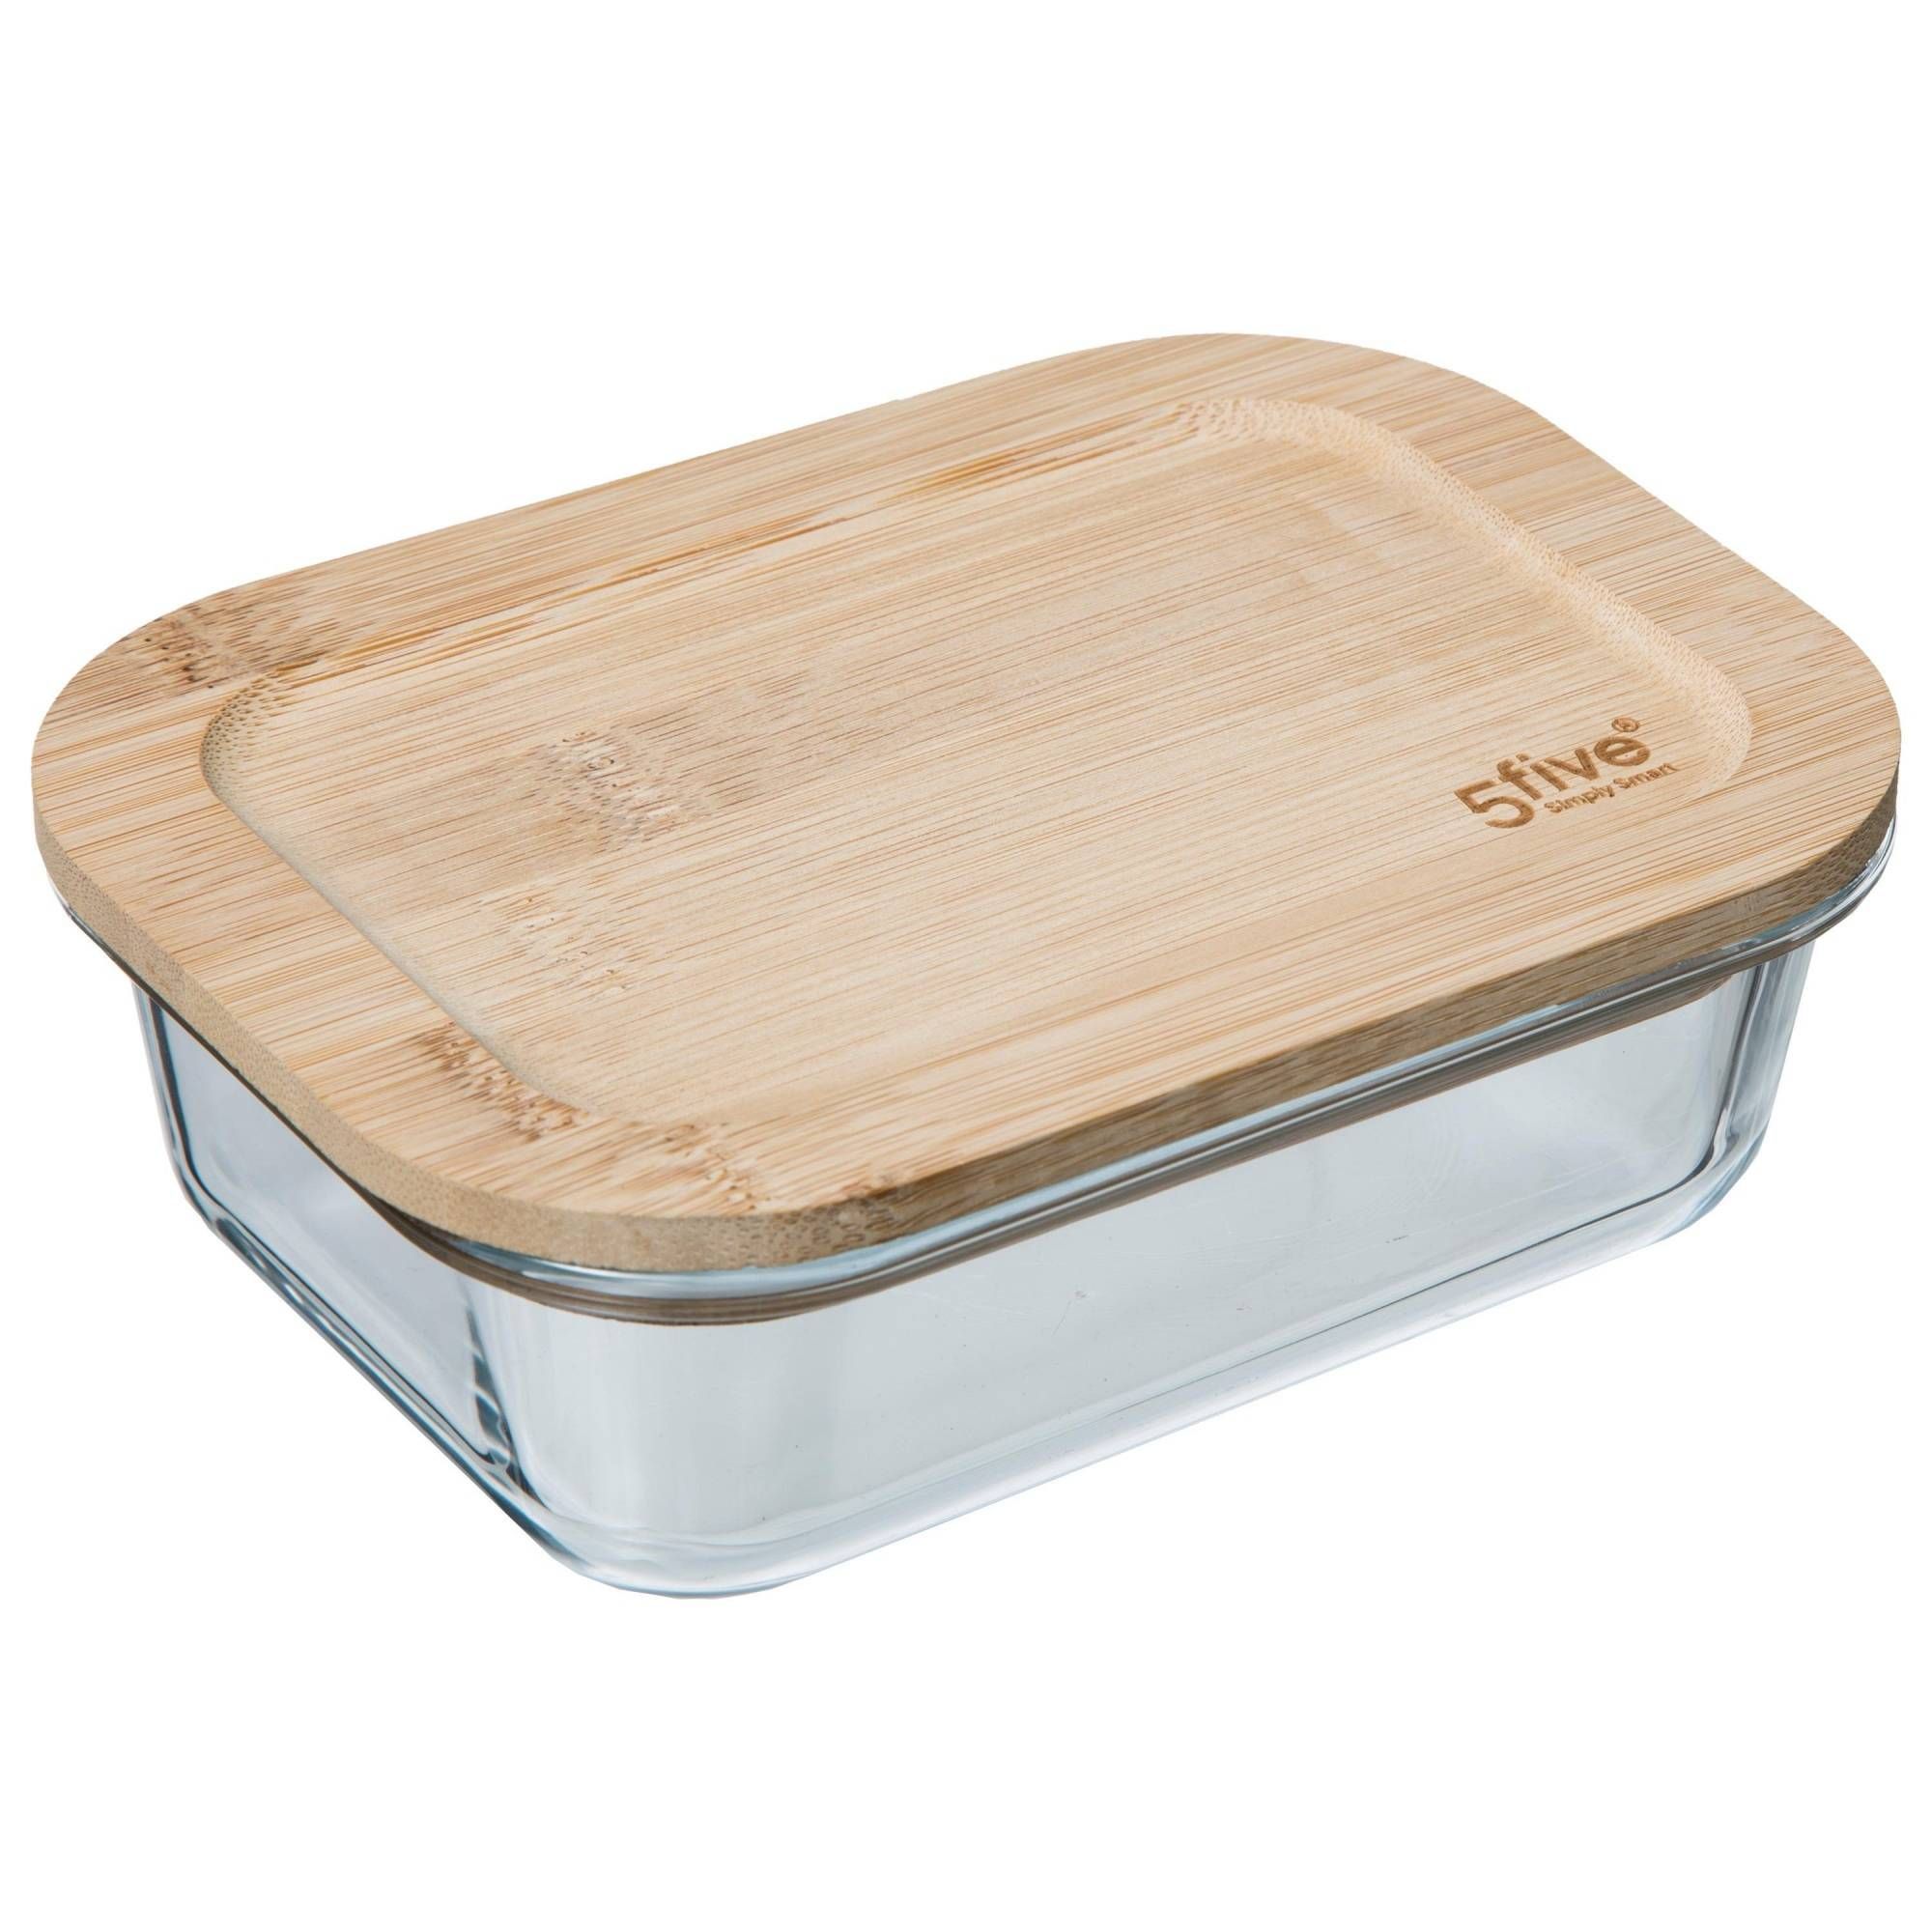 5five Simply Smart Skleněná nádoba na potraviny, bambusové víko, 1 l - EMAKO.CZ s.r.o.